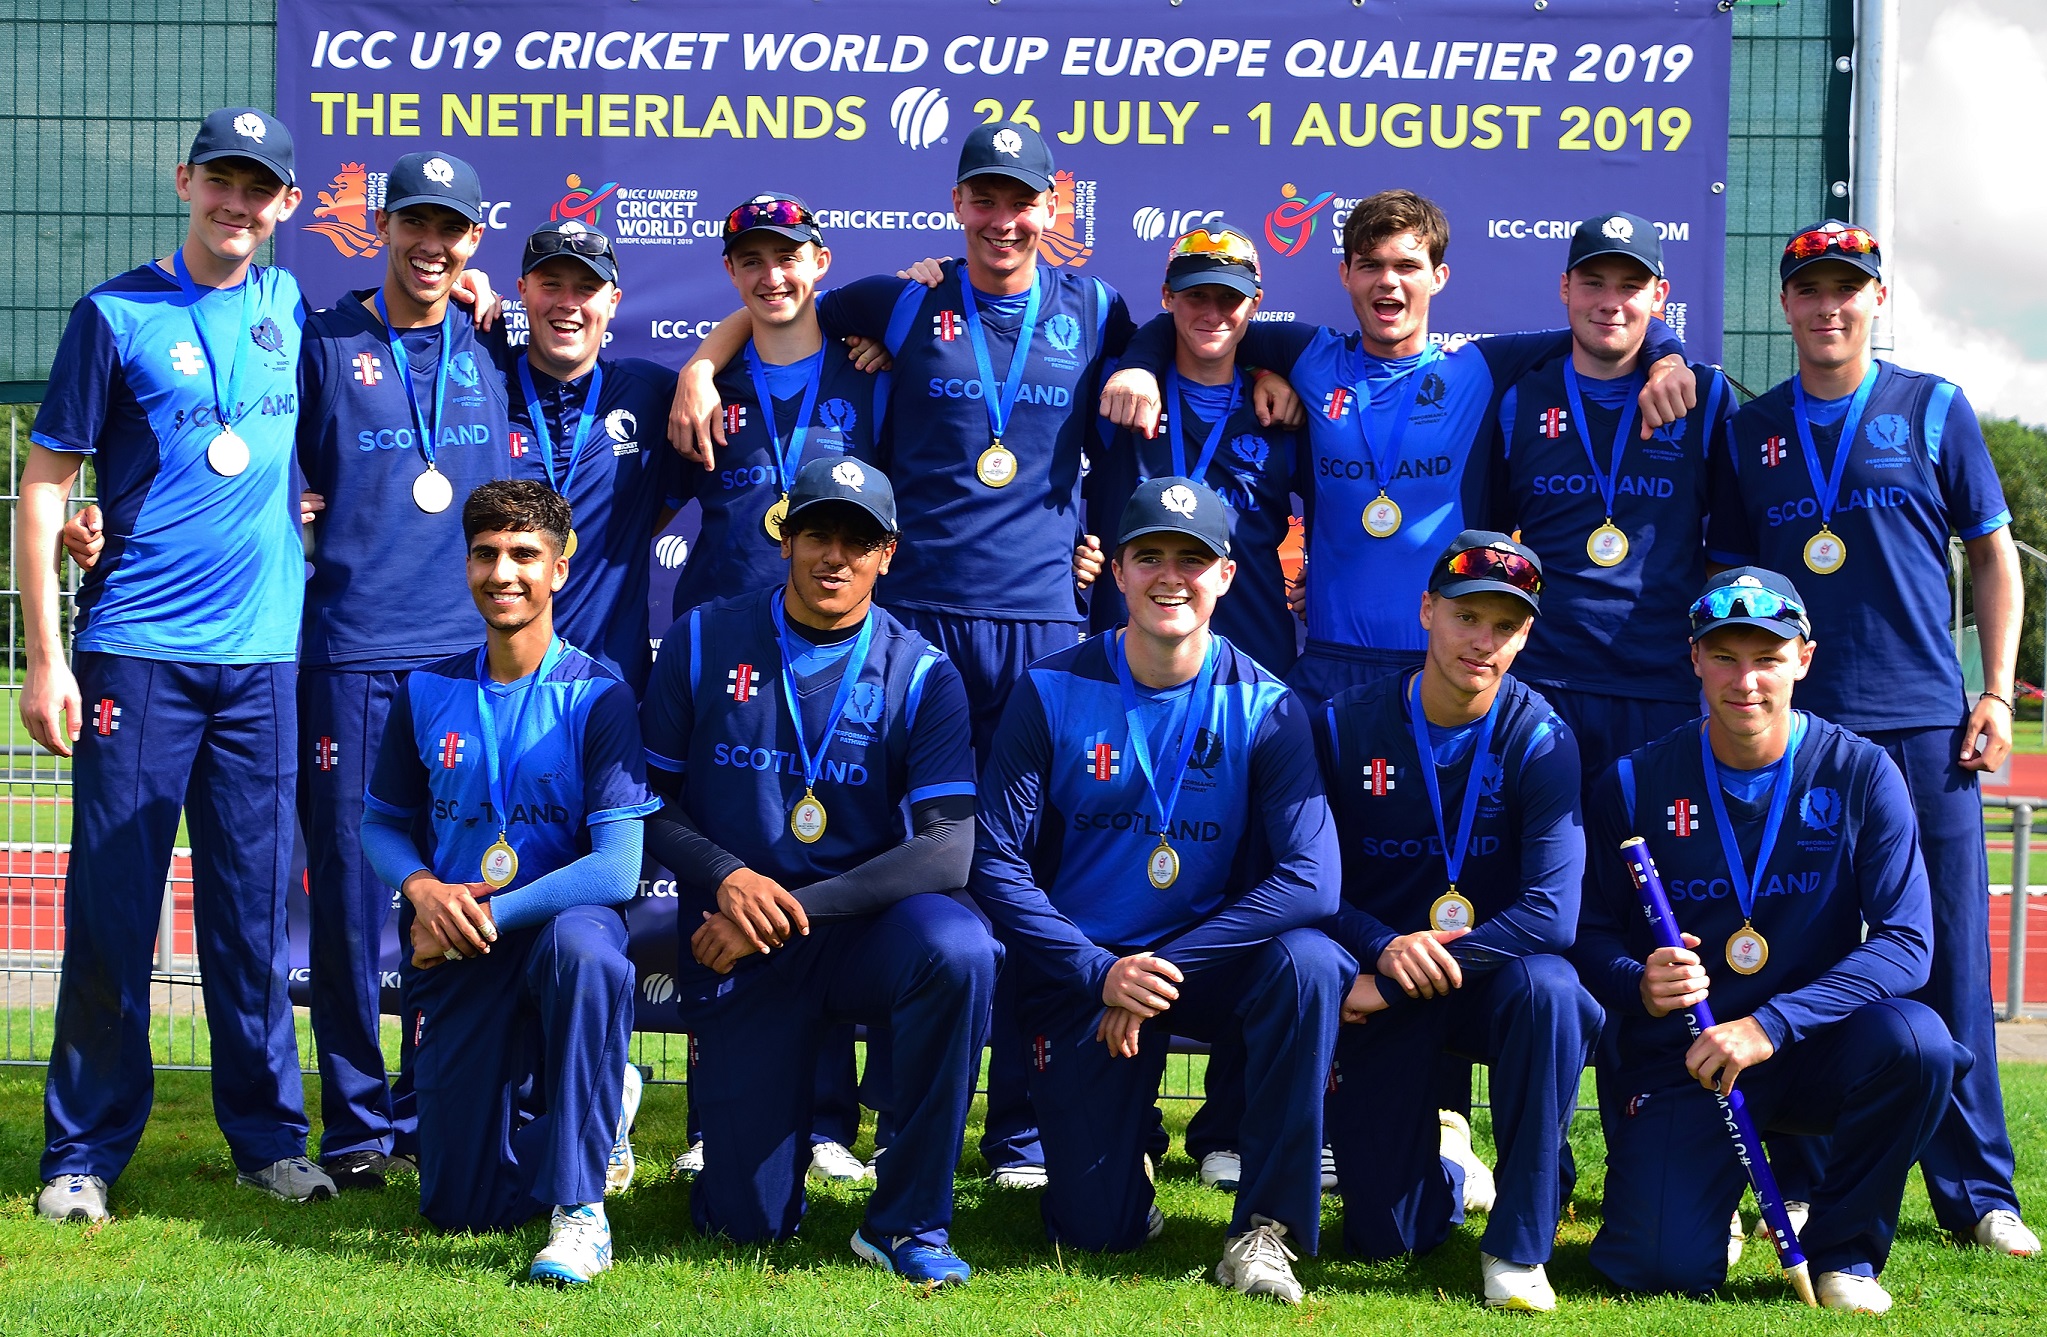 U19 Cricket World Cup: Scotland in 2016